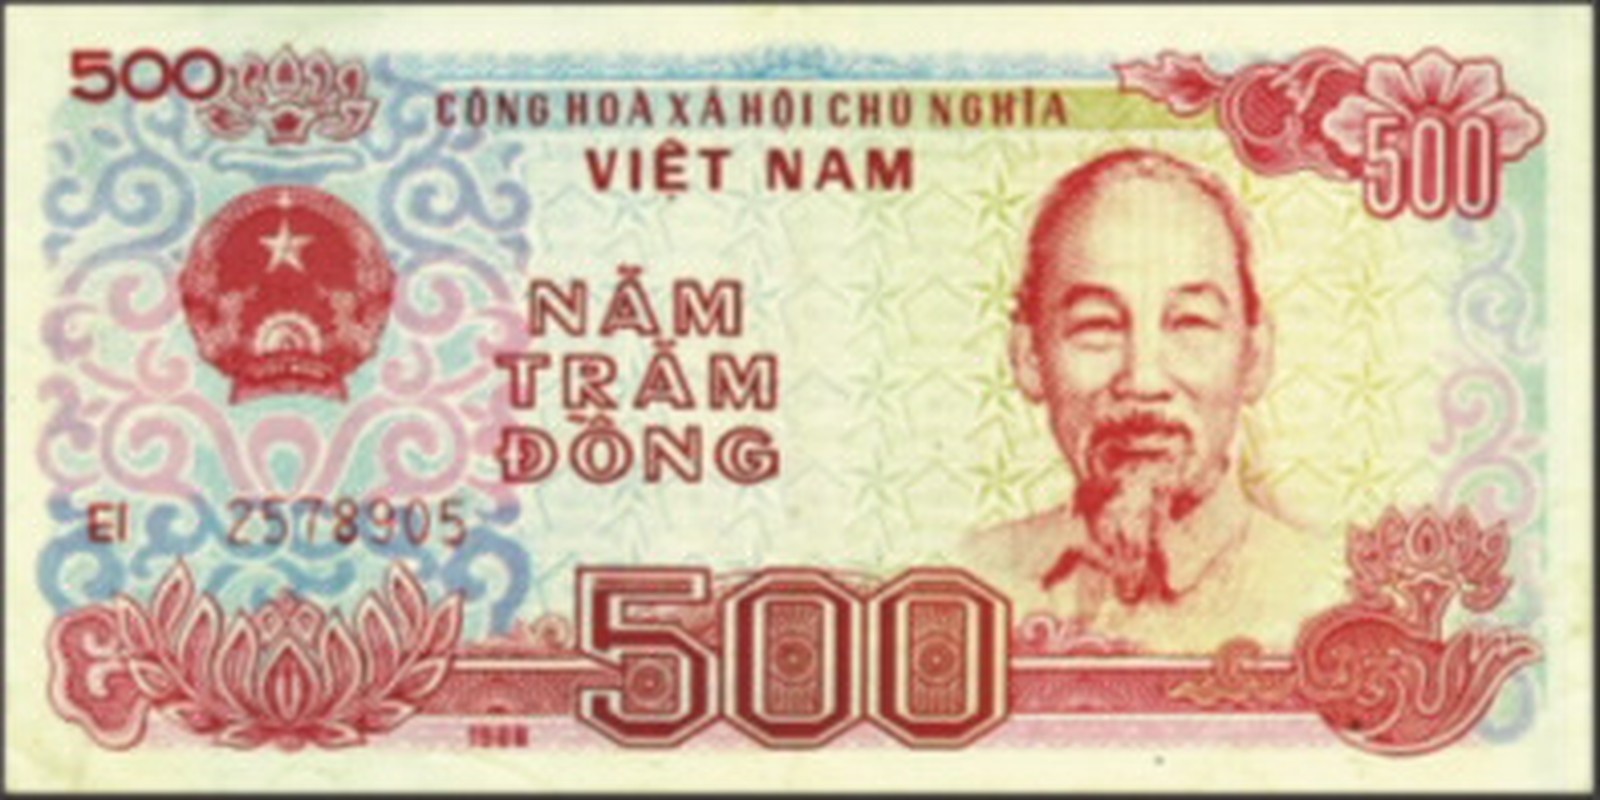 3 to tien giay cua Viet Nam dang luu hanh nhung hiem gap-Hinh-9